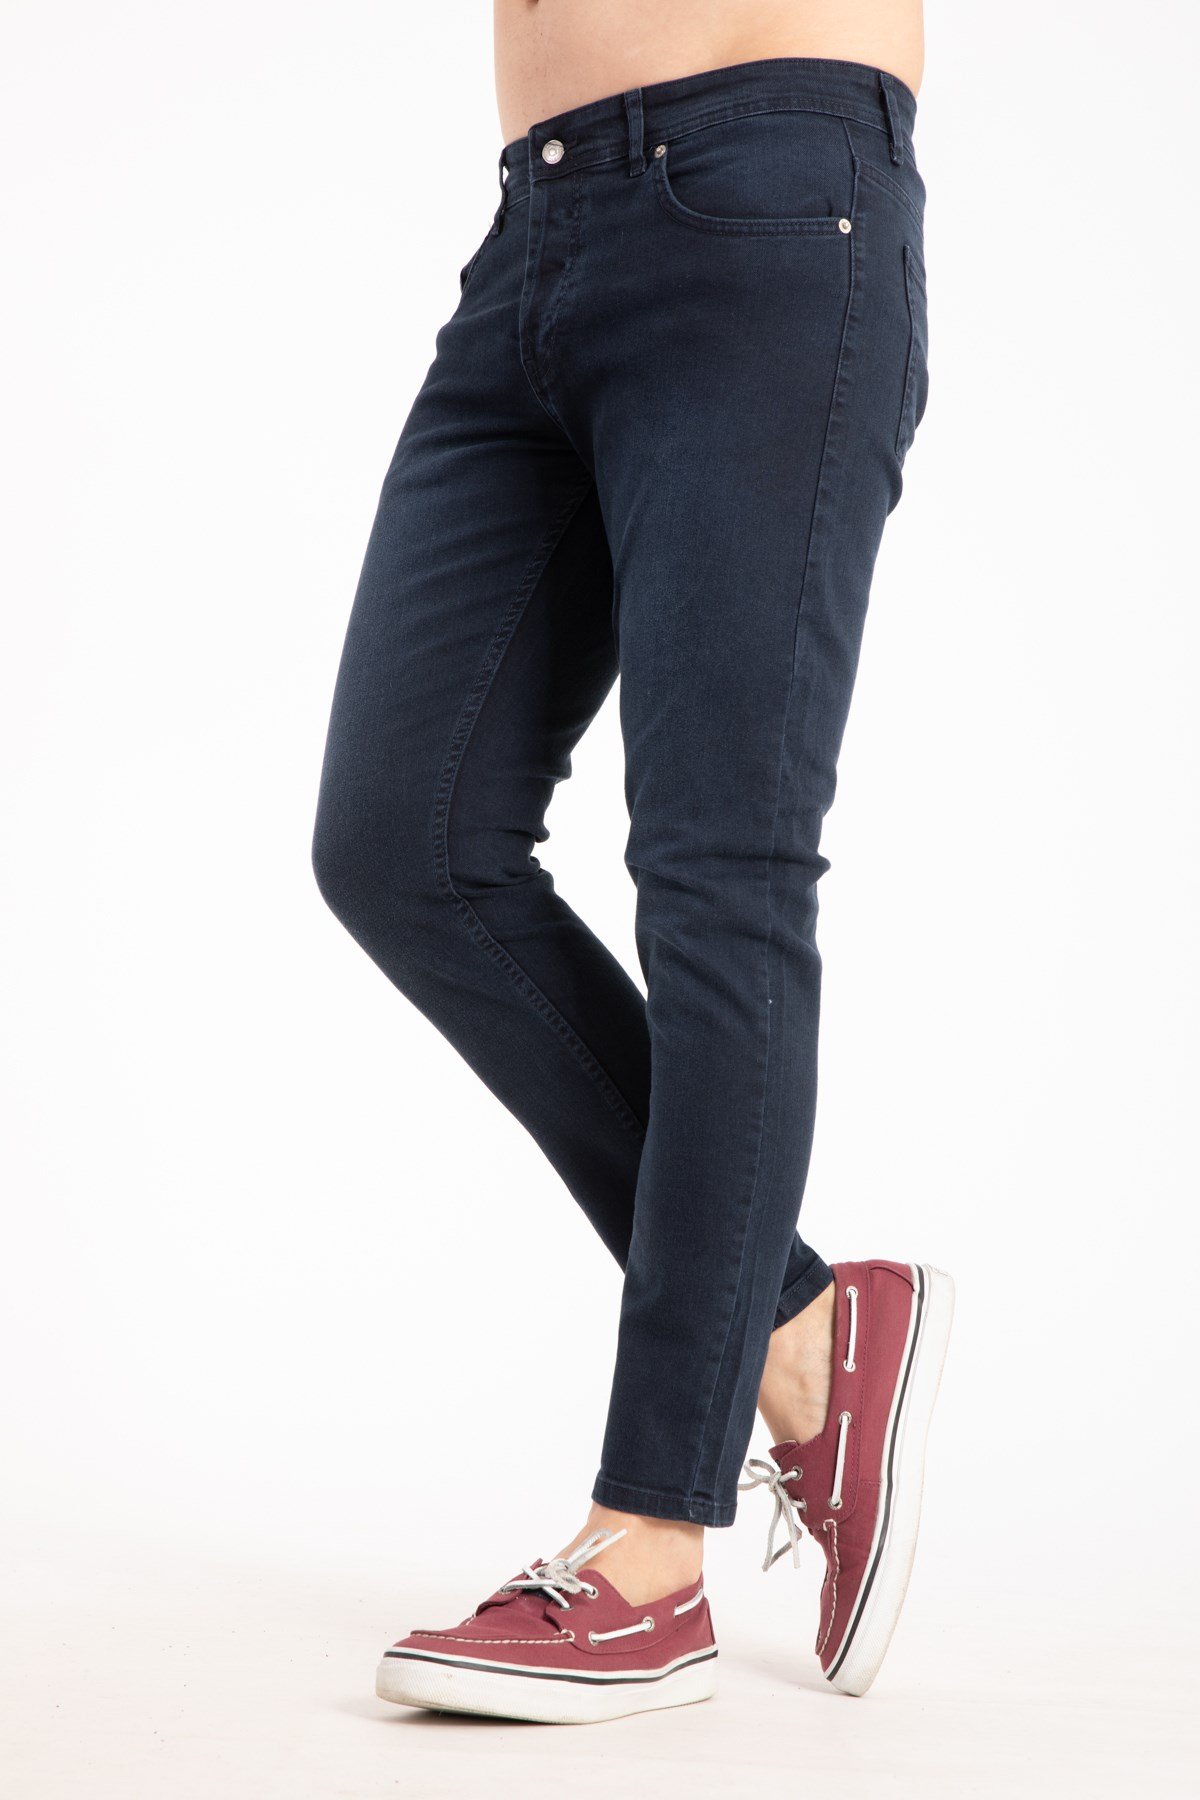 Erkek Slim Fit Bilek Boy Likralı Kot Pantolon 2300-Lacivert